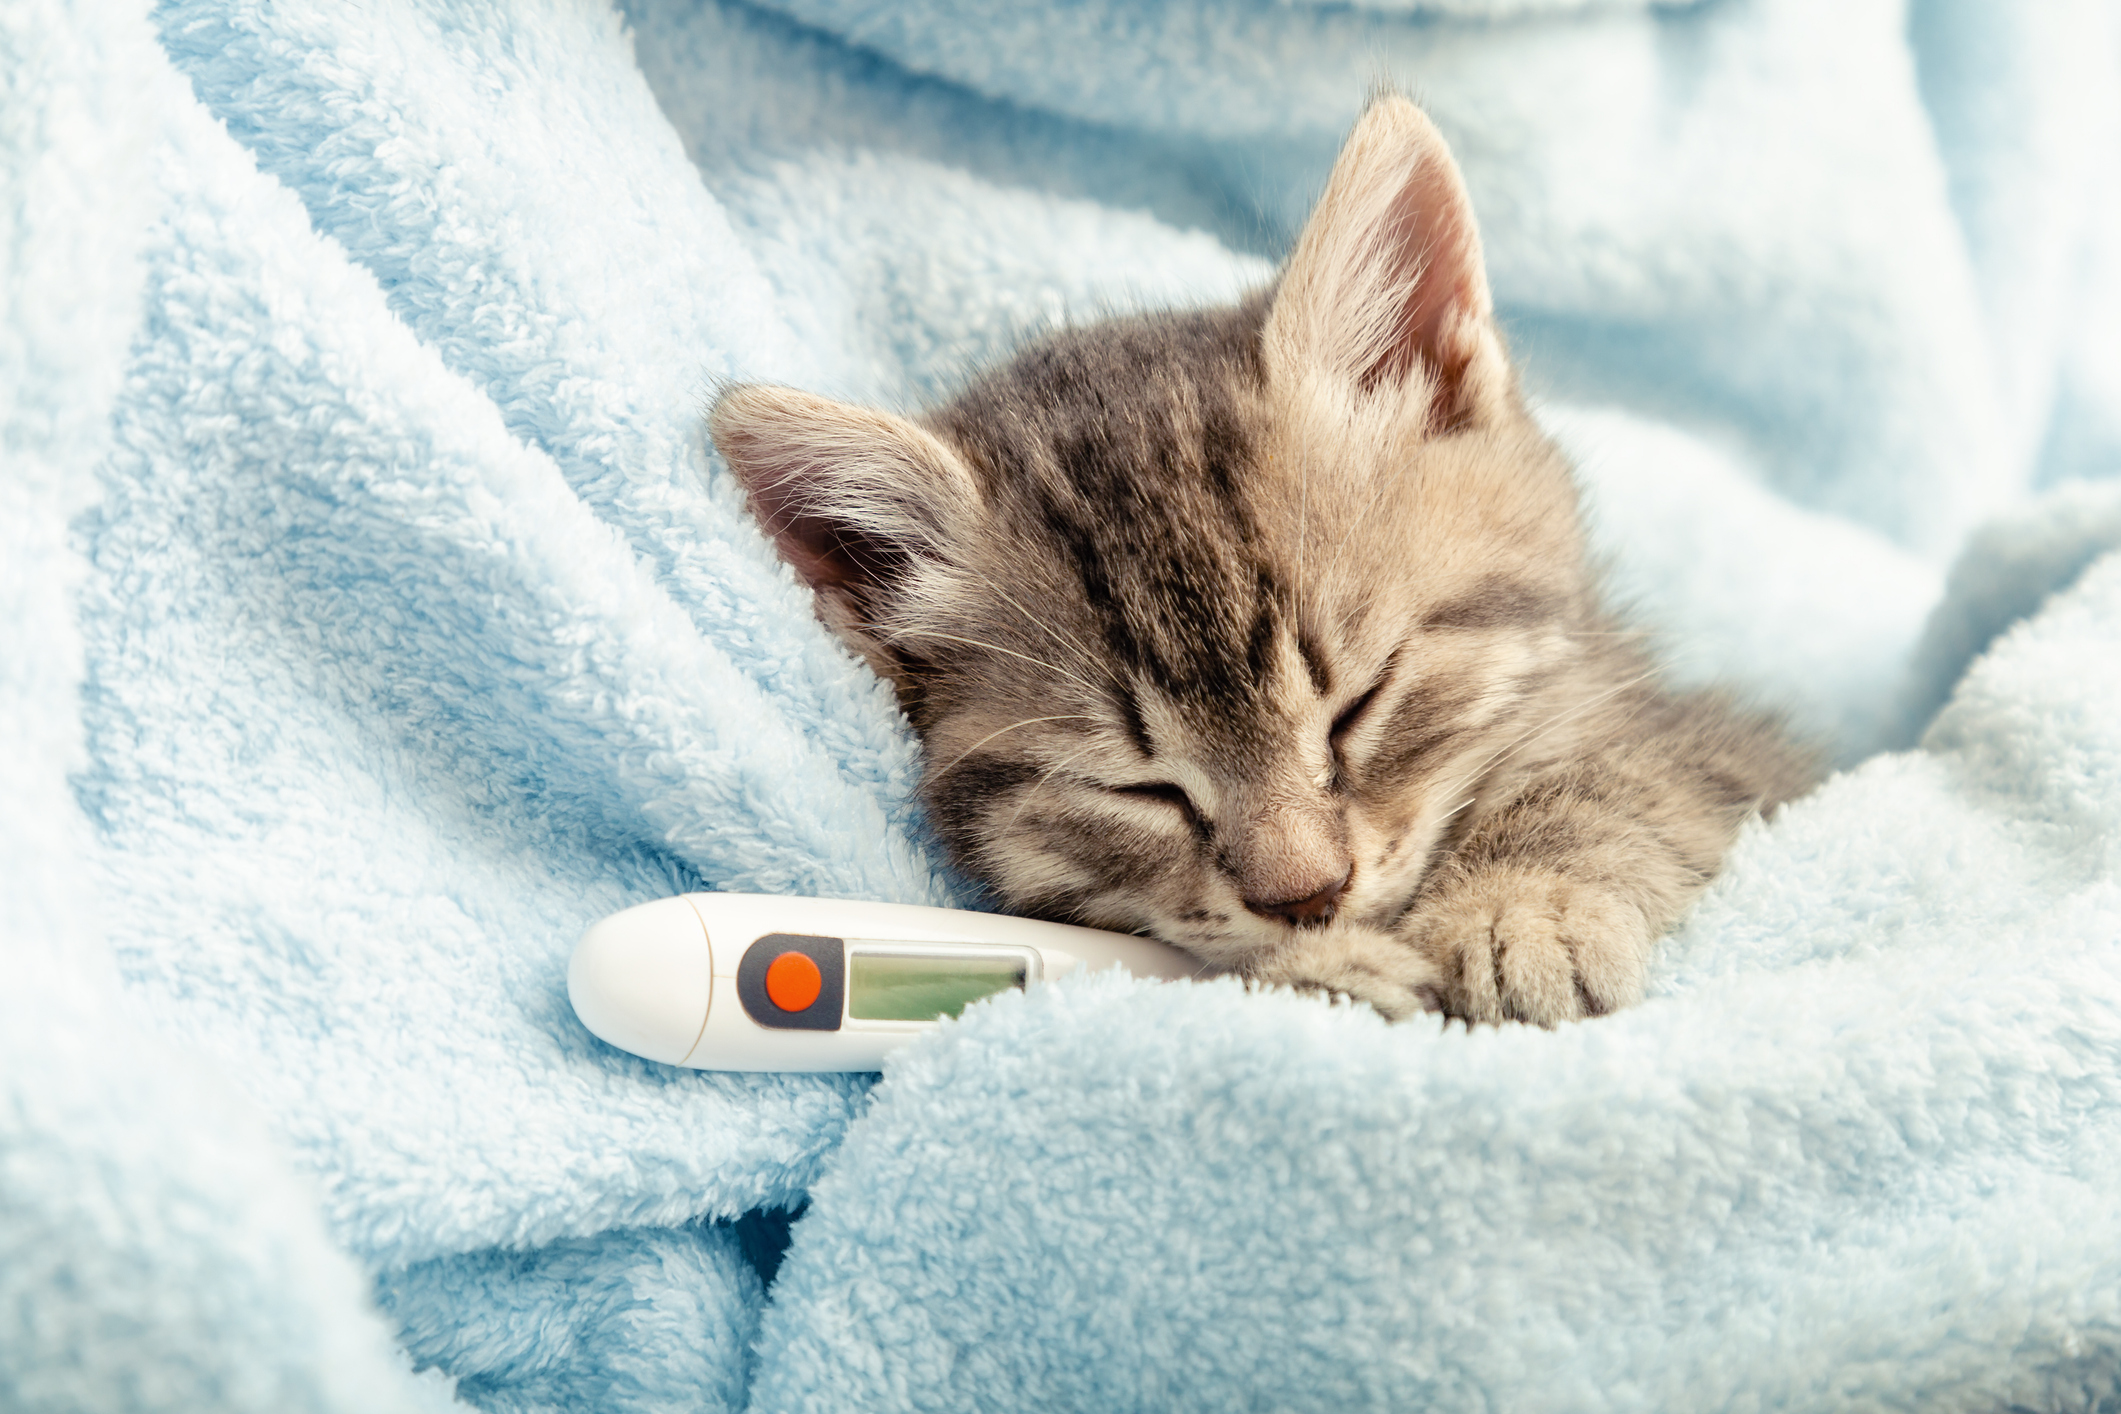 Charity warns of cat flu risk